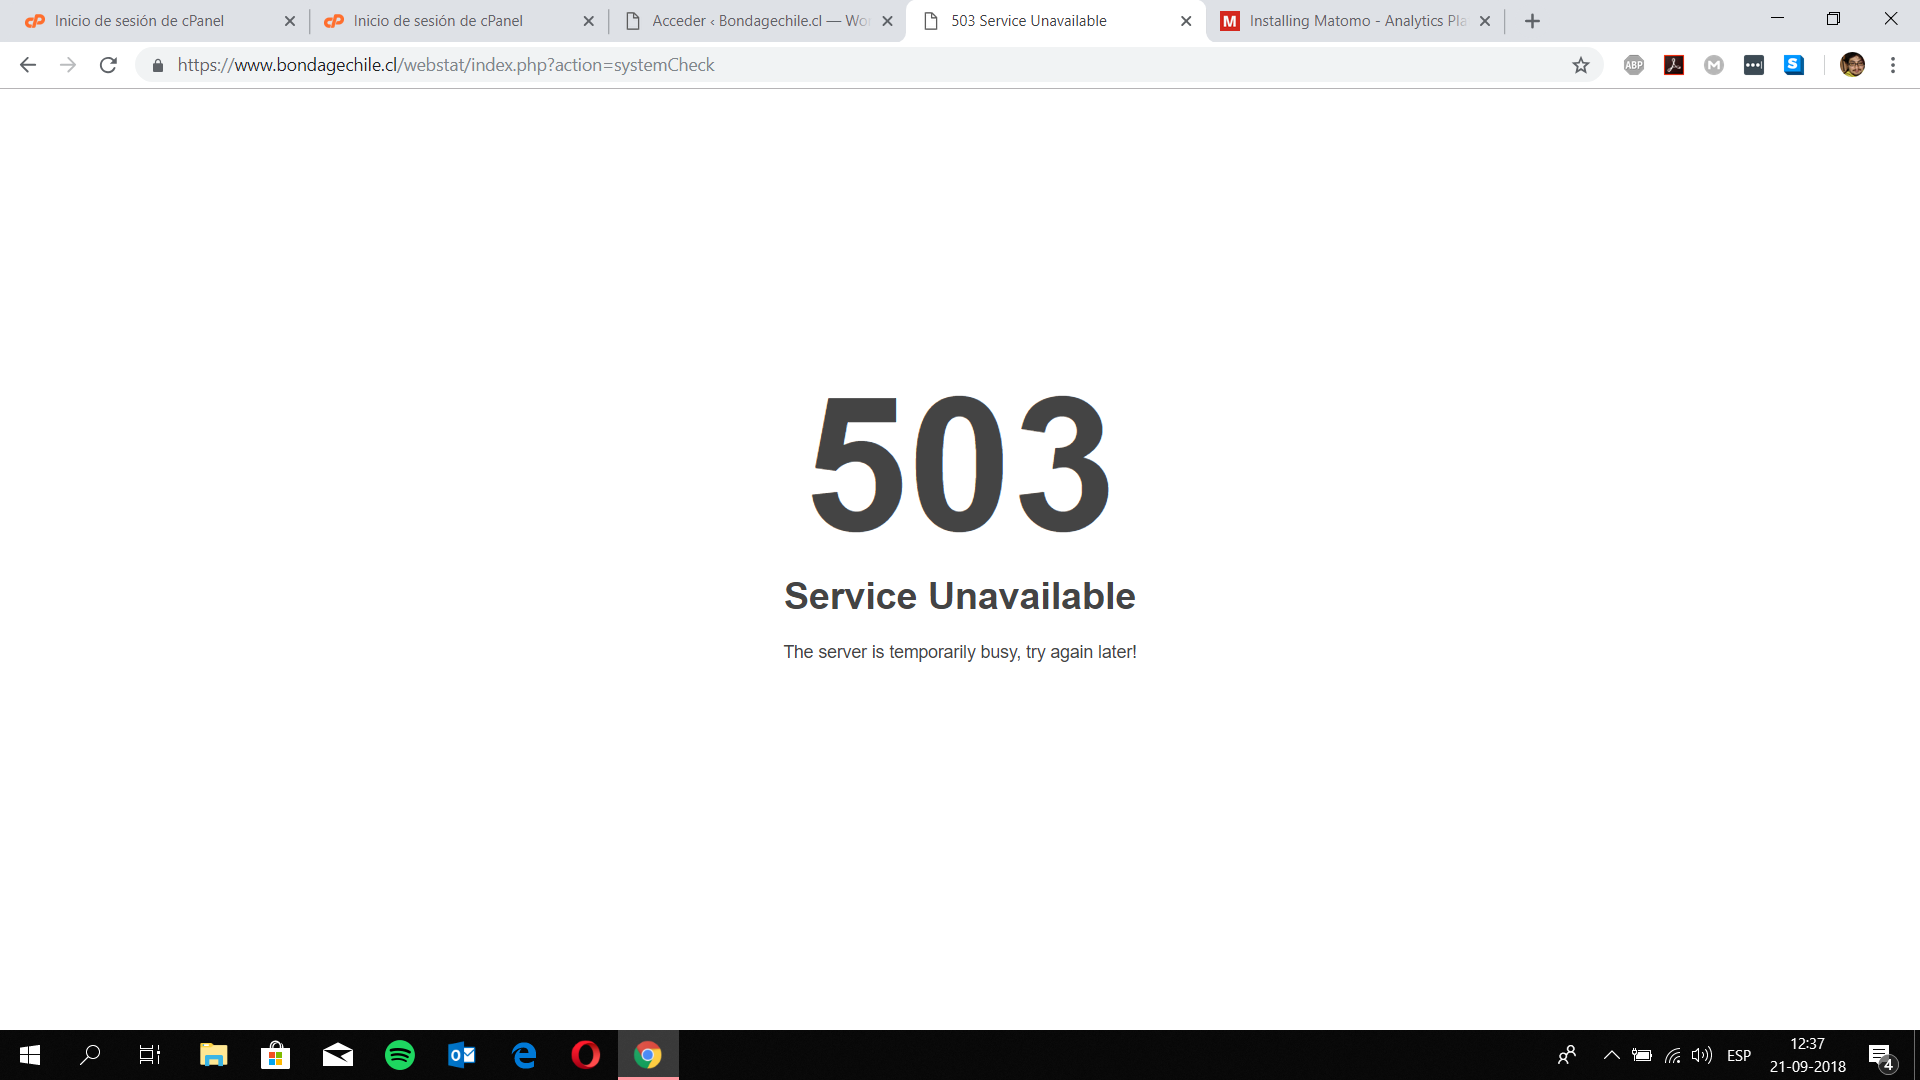 Lỗi thường gặp khi truy cập website - Lỗi 503 Service Unavailable